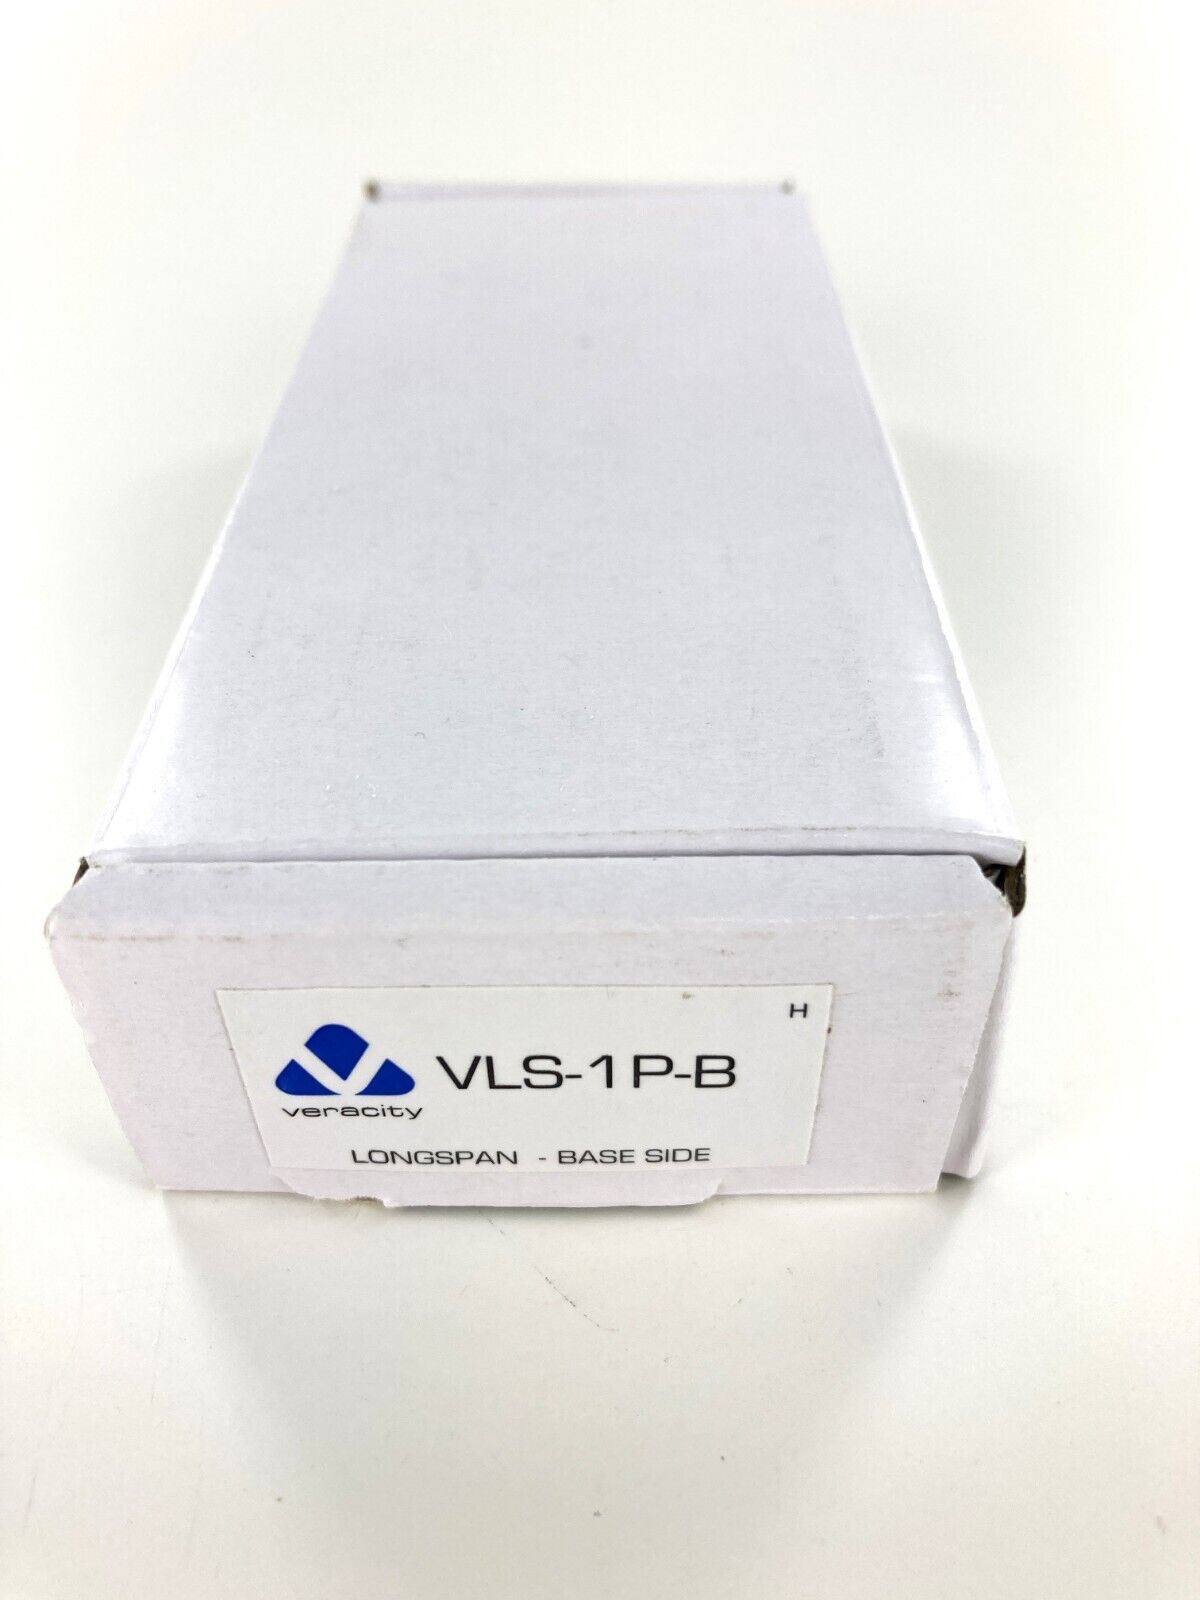 NOB - Veracity VLS-1P-B Longspan Long Range Ethernet and POE Extender Base